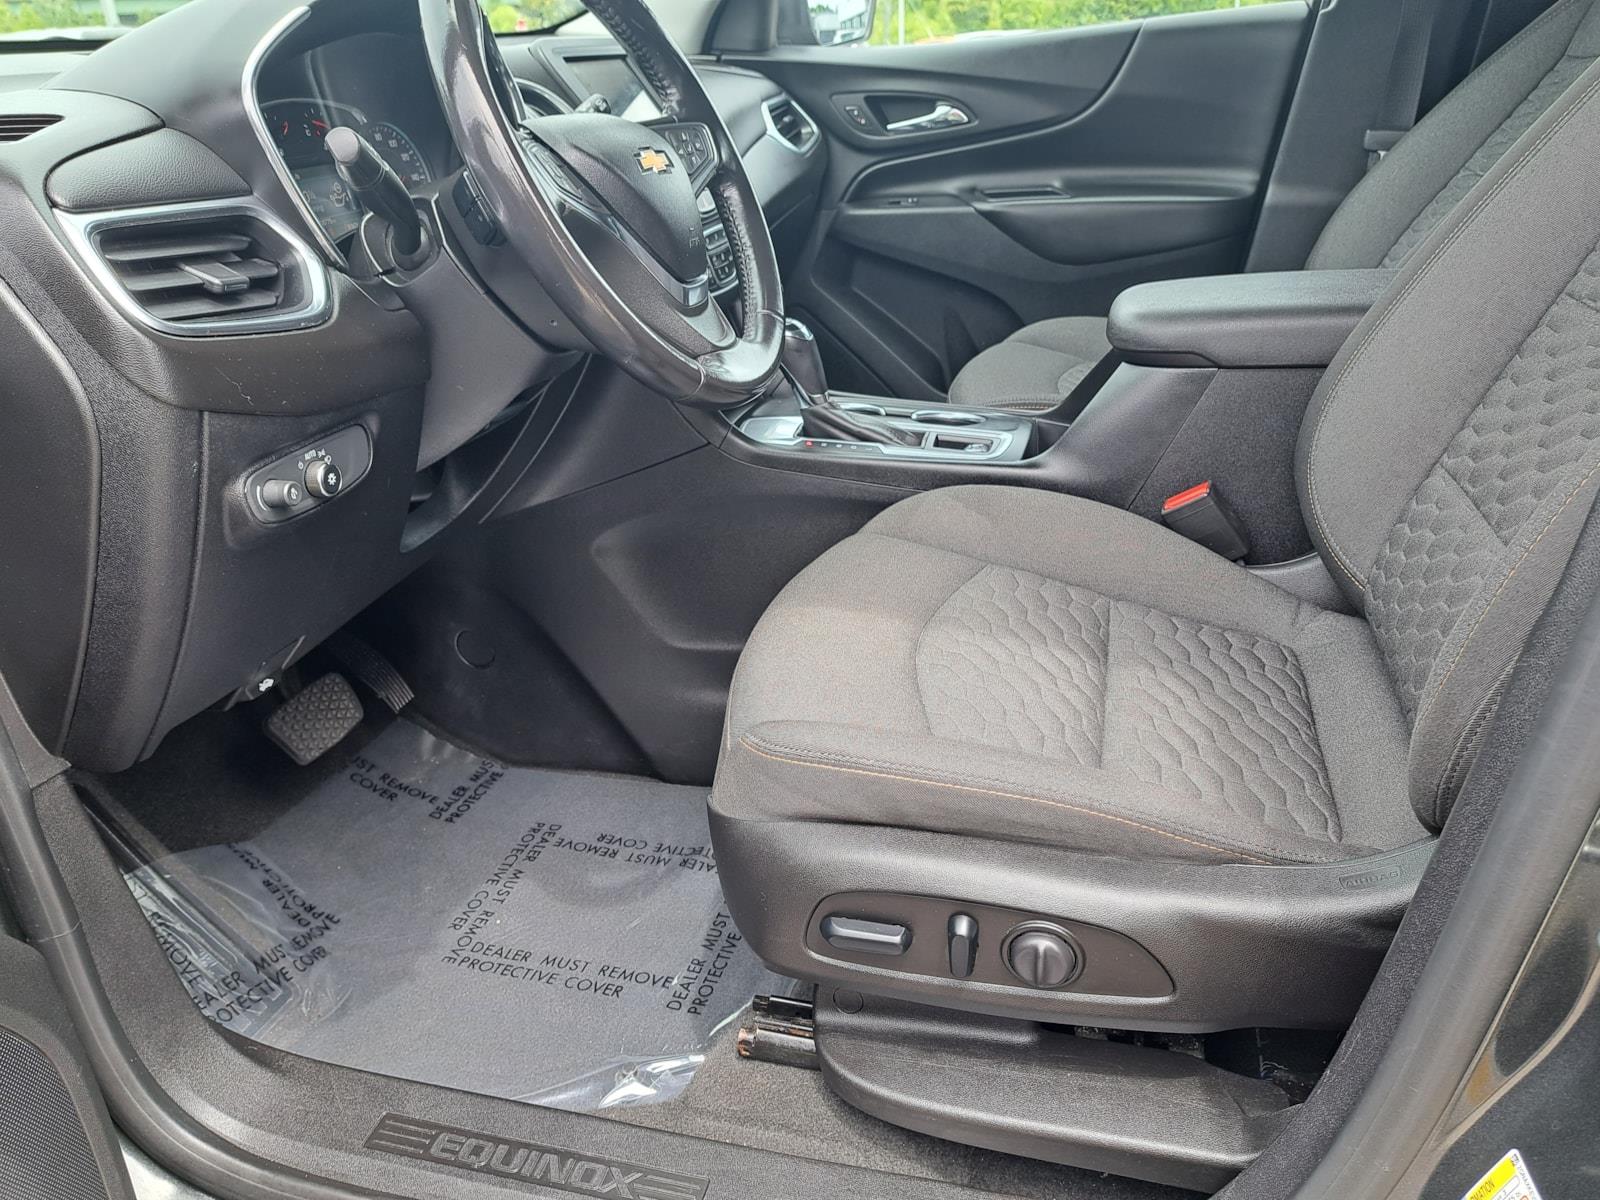 2019 Chevrolet Equinox LT SUV Front Wheel Drive 20